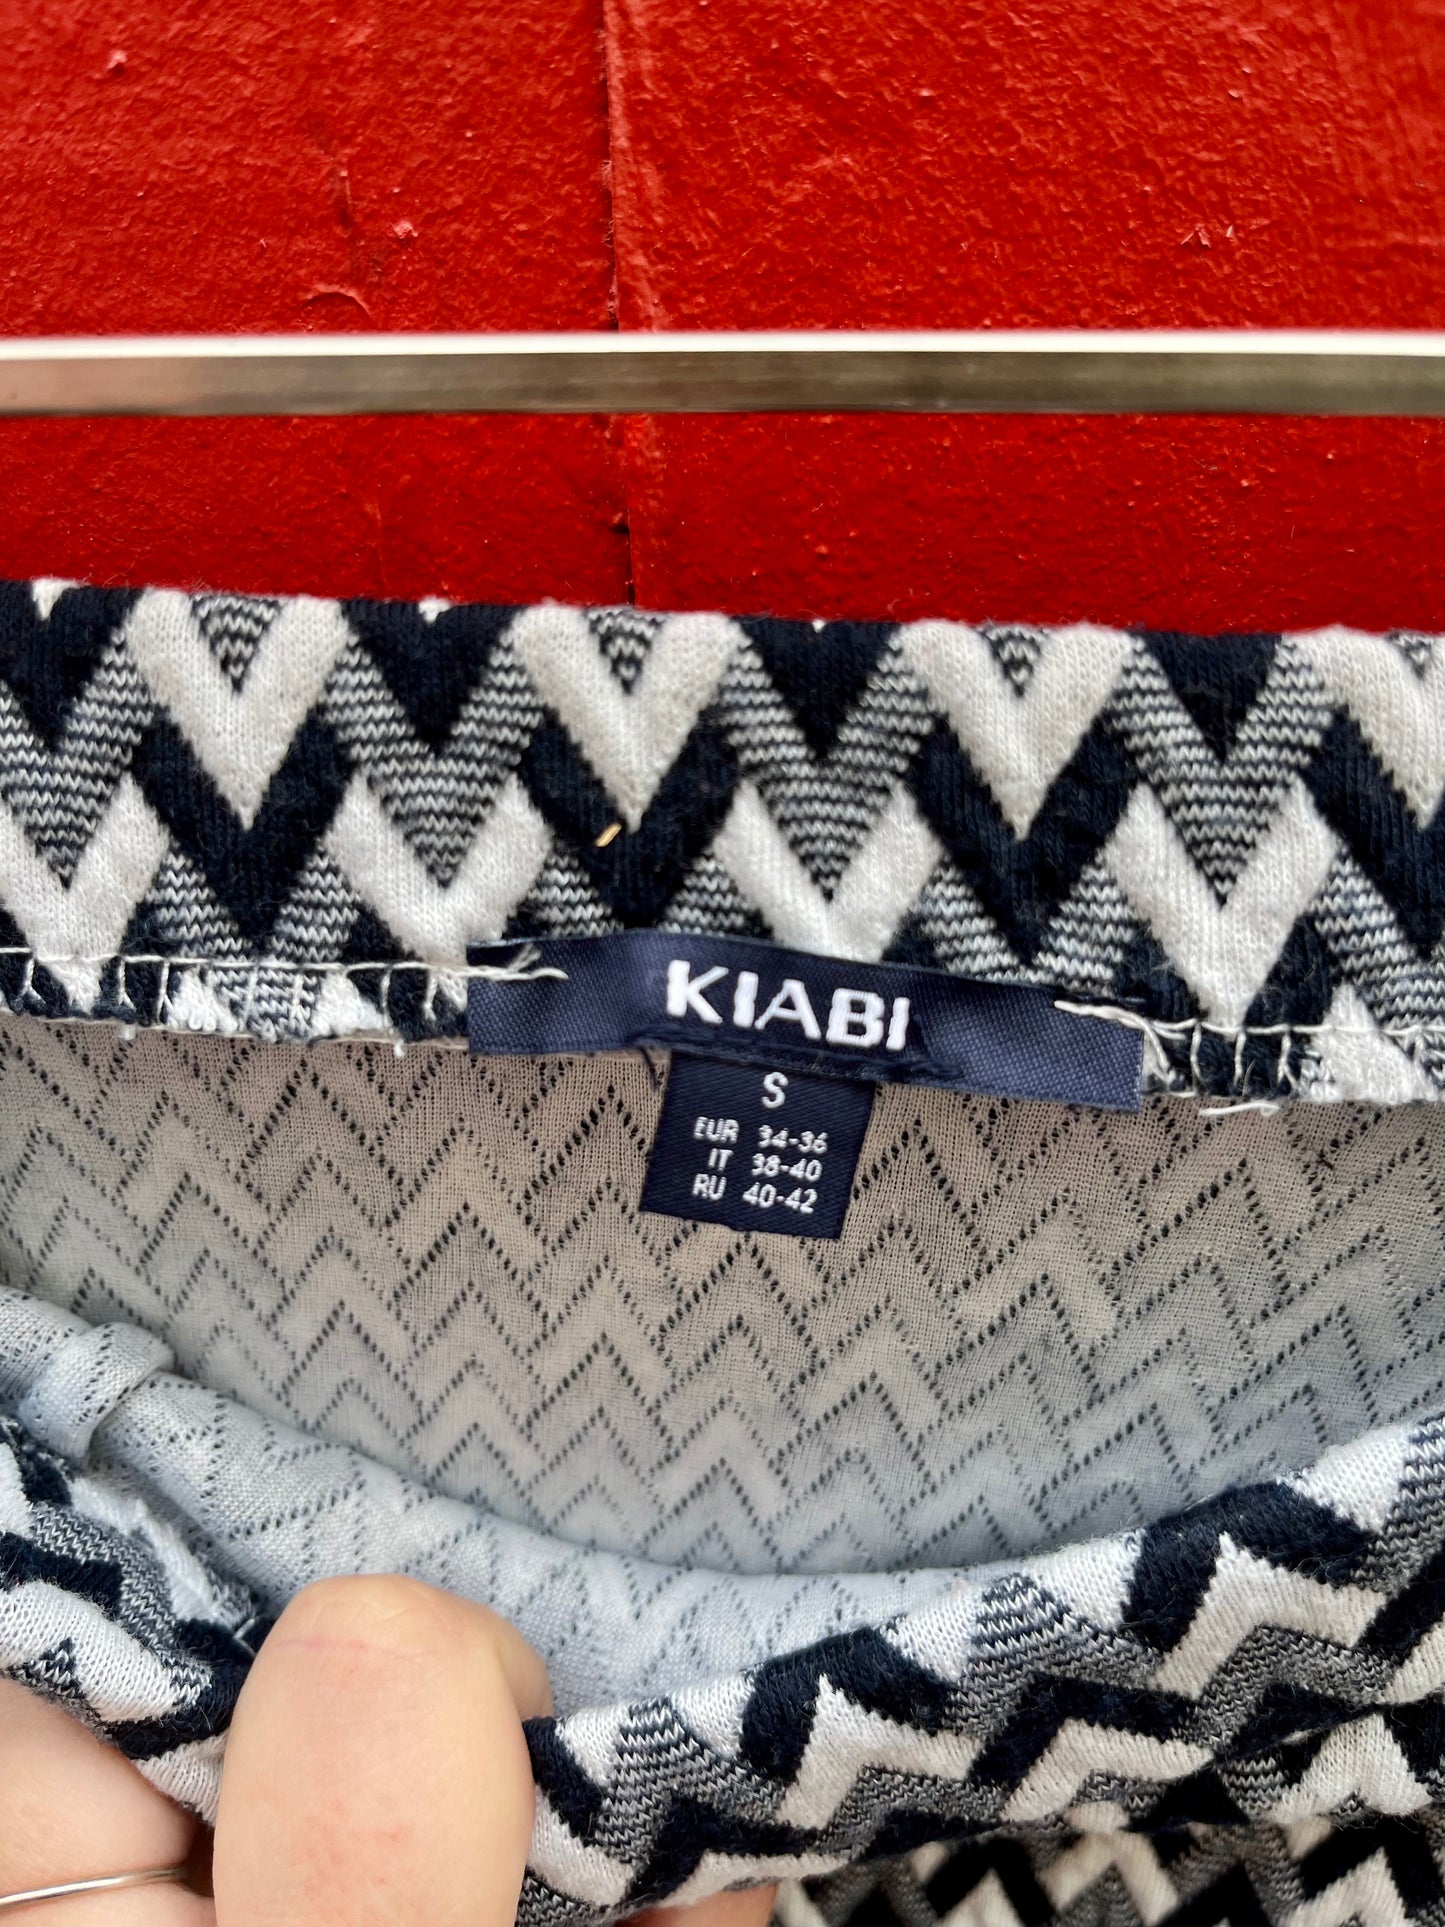 La jupe à motifs, KIABI, taille 34-36